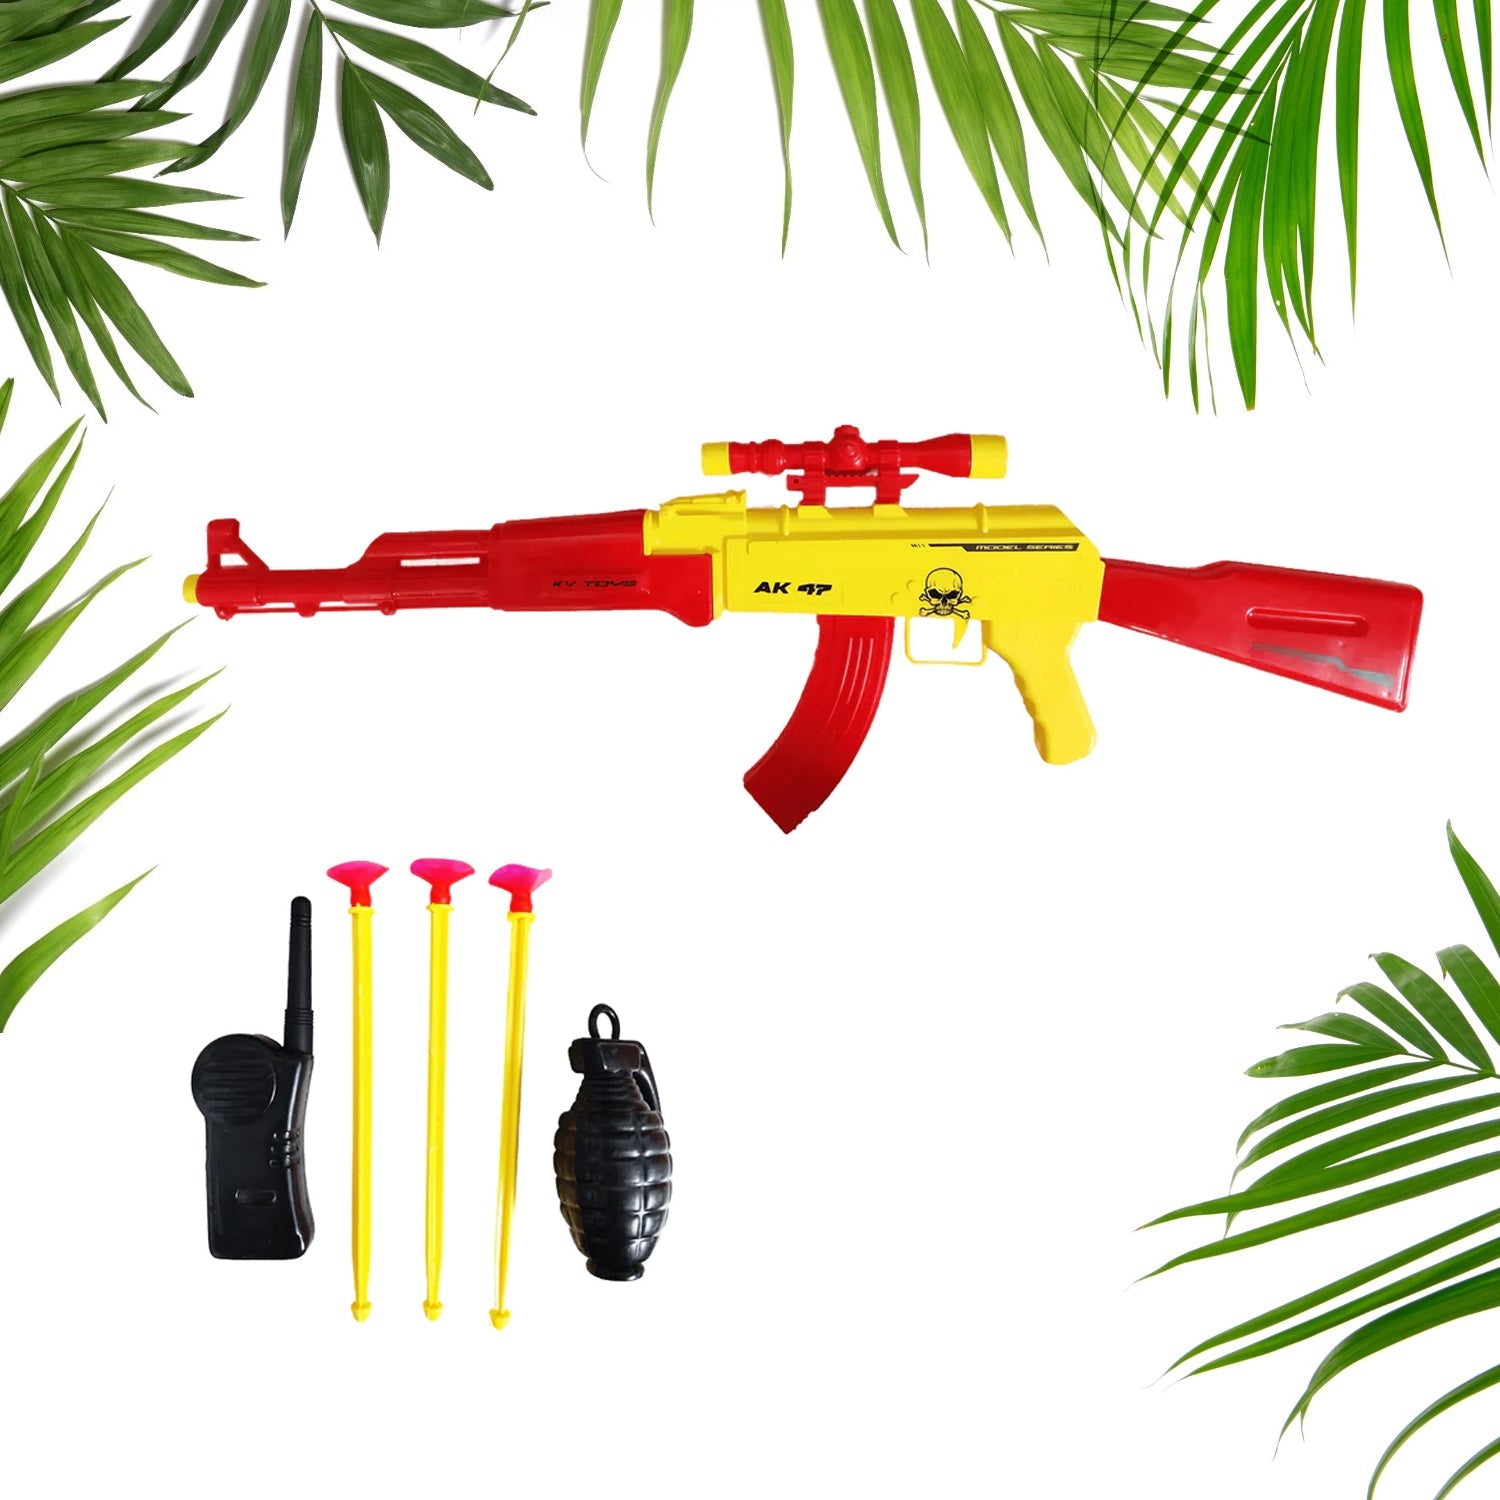 3121 Big Plastic AK 47 Toy Gun for Kids - 26 Inch Gun Toy for Kids Shooting Gun with Arrow Bullets Kids Toy Return Gift Item